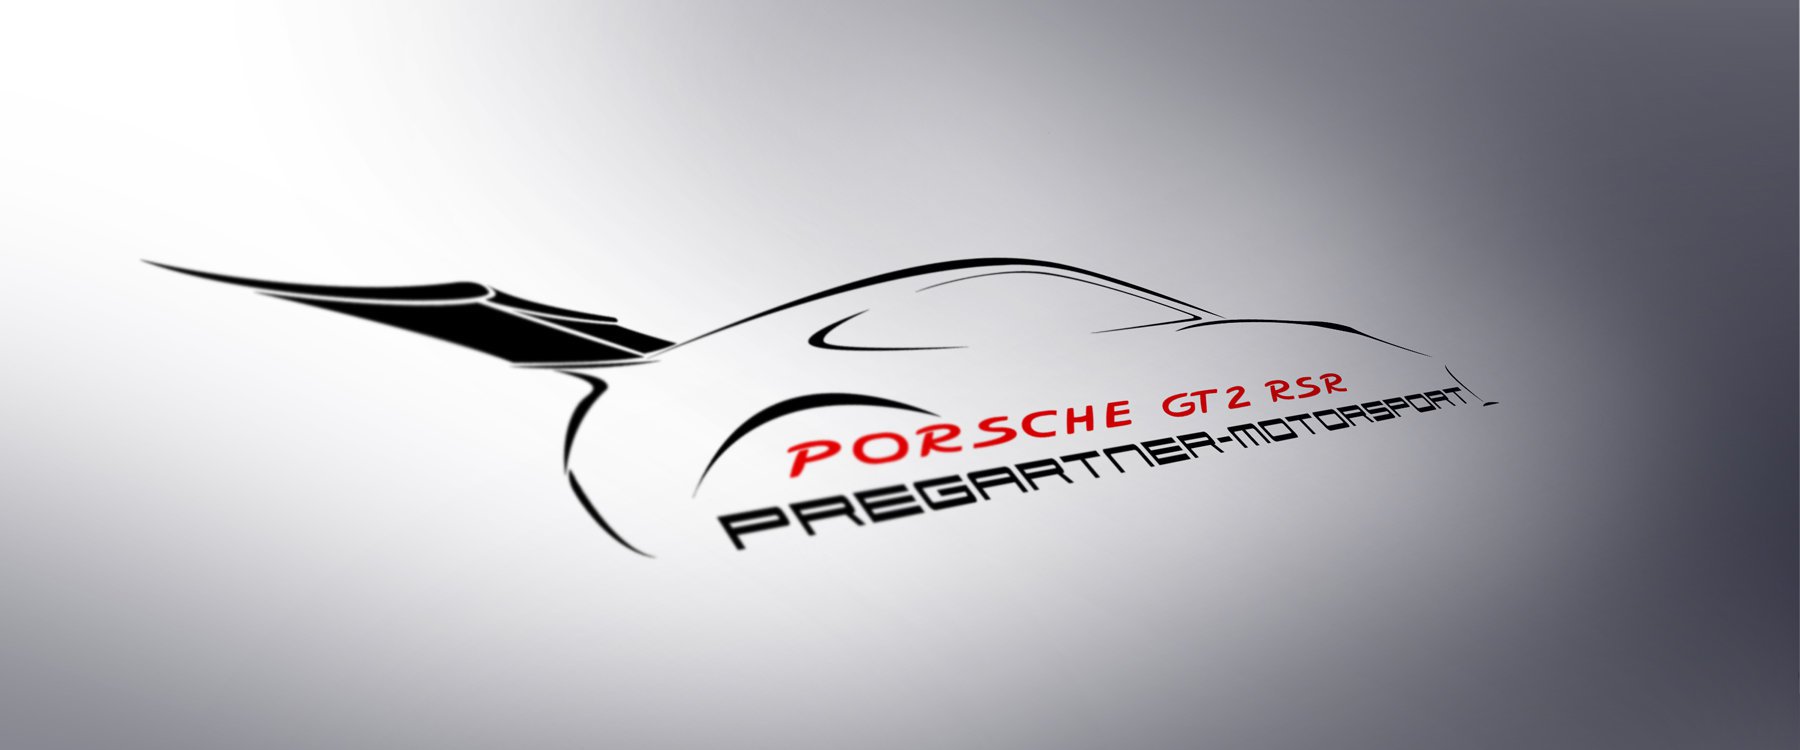 Porsche GT2 RSR Pregartner Motorsport #2